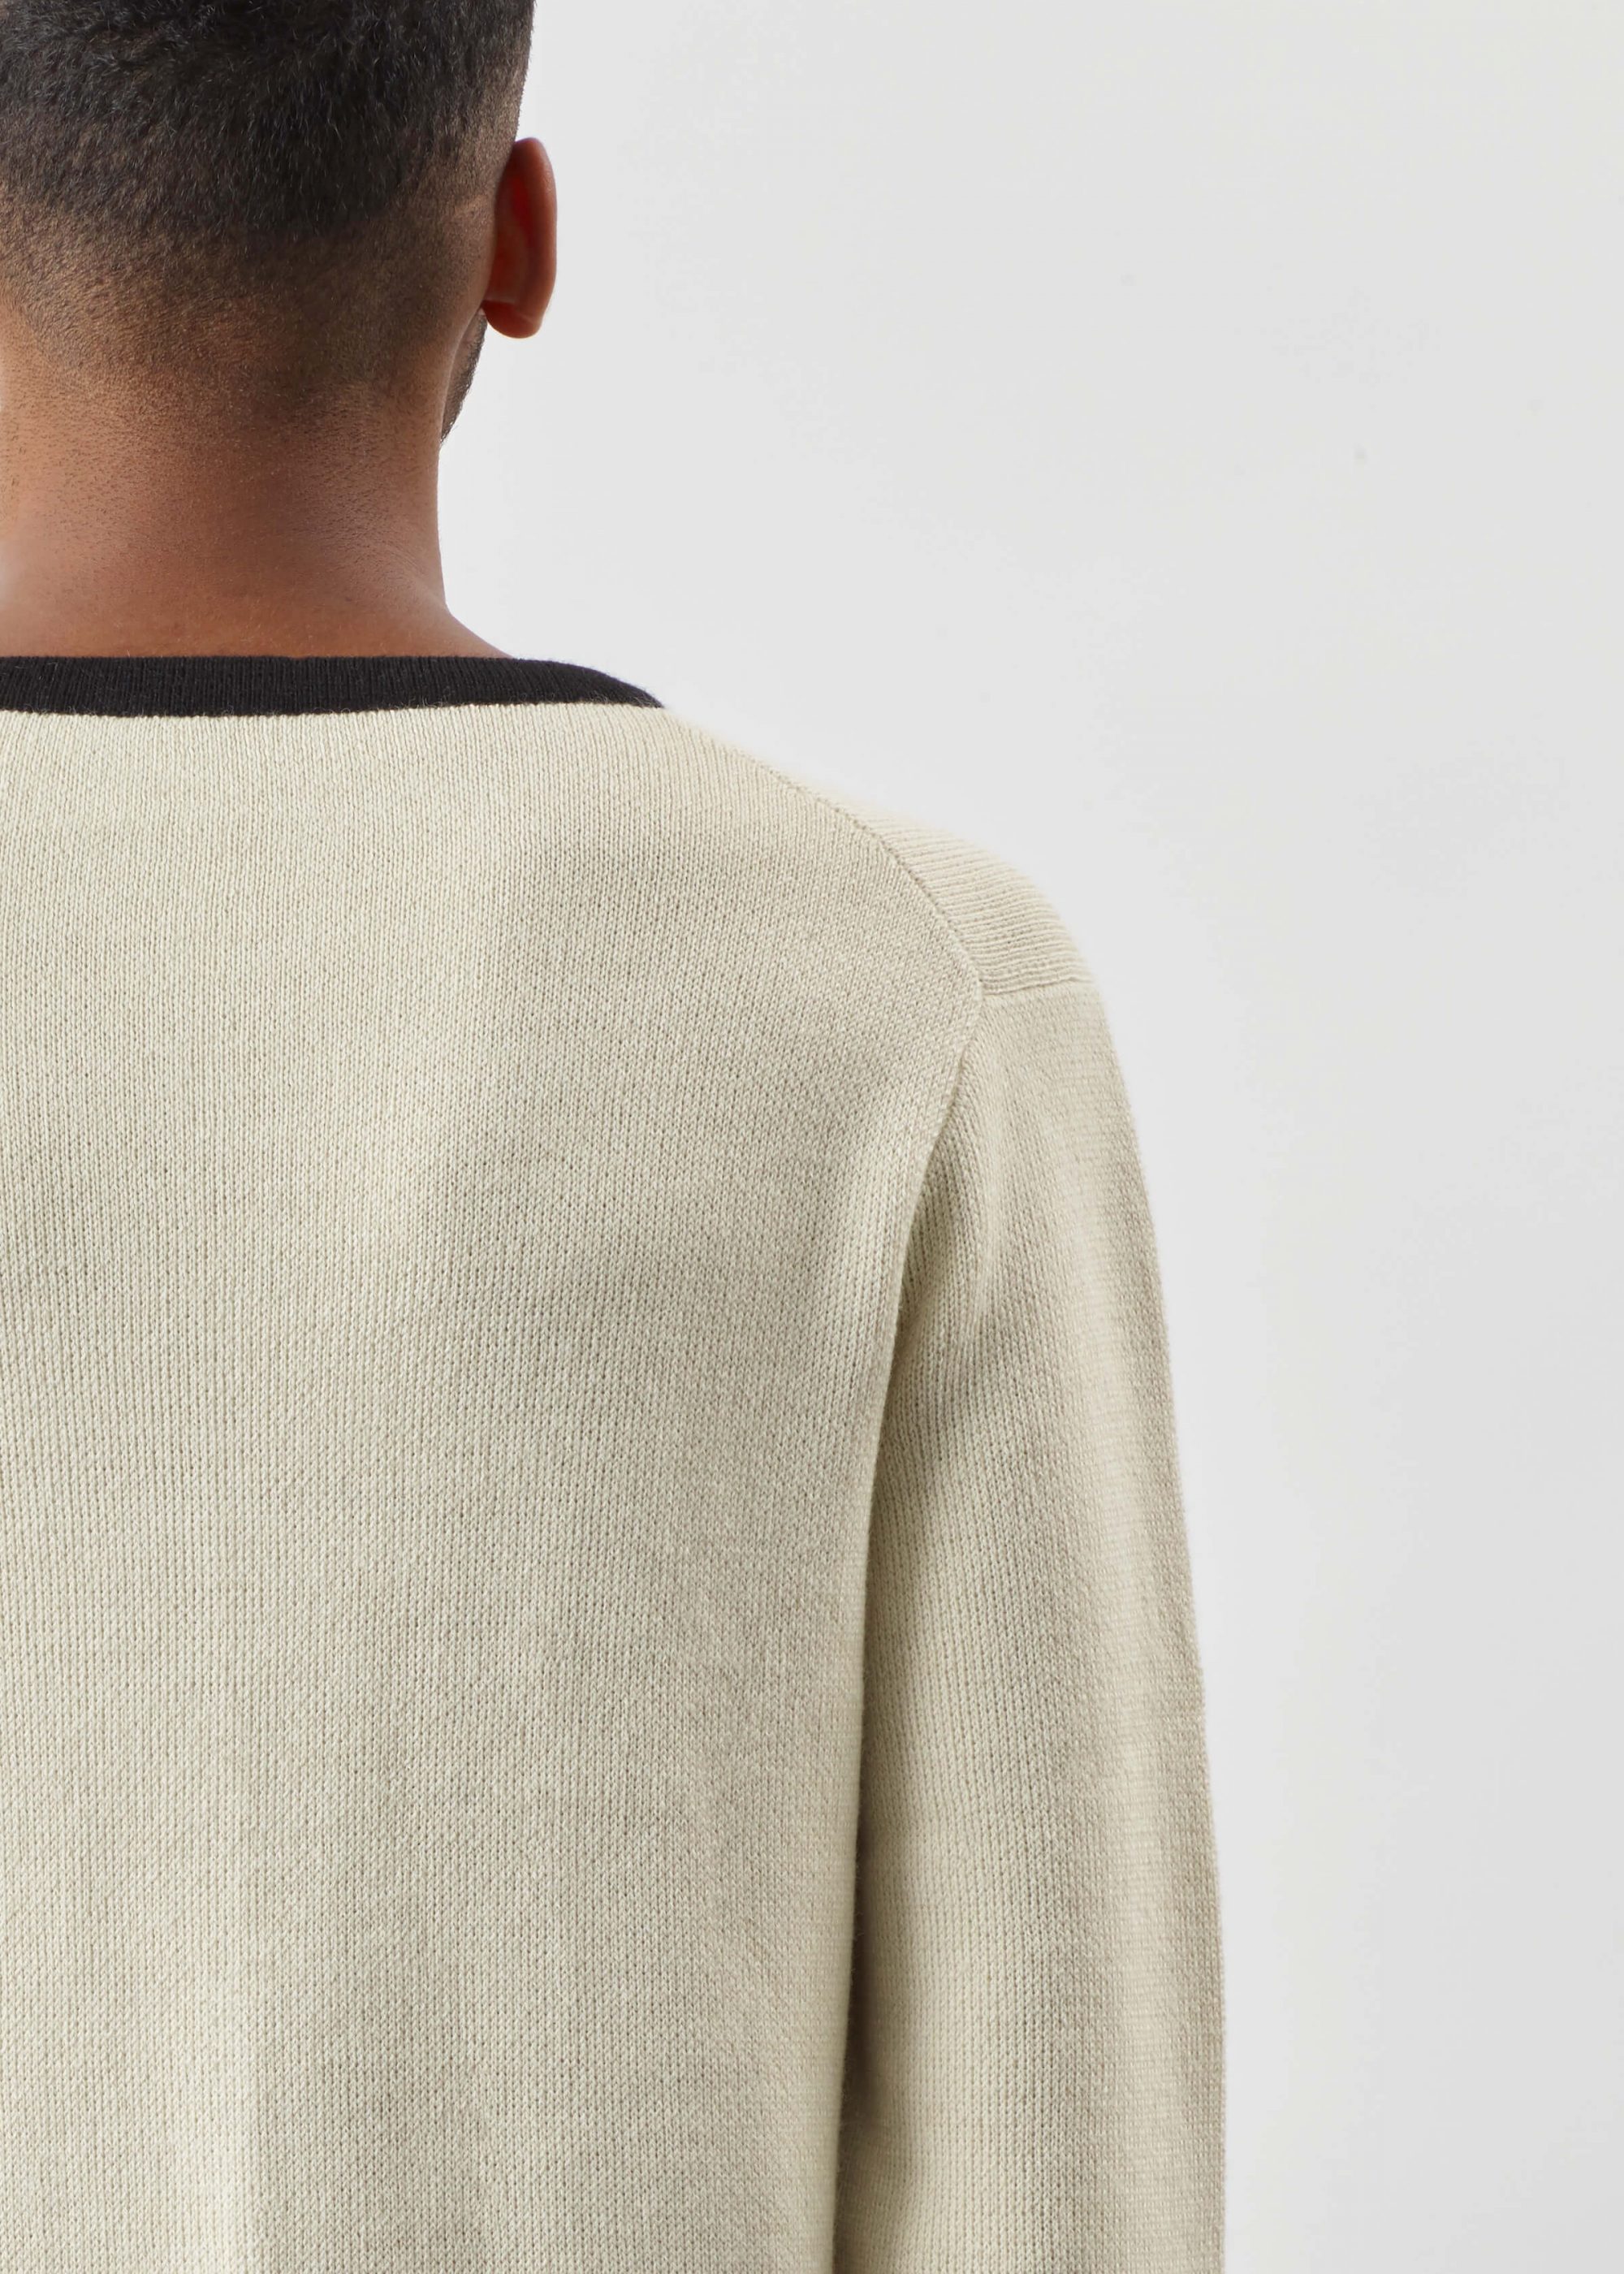 Product image for »Van Doesburg« Sweater Baby Alpaca | Ecru Black